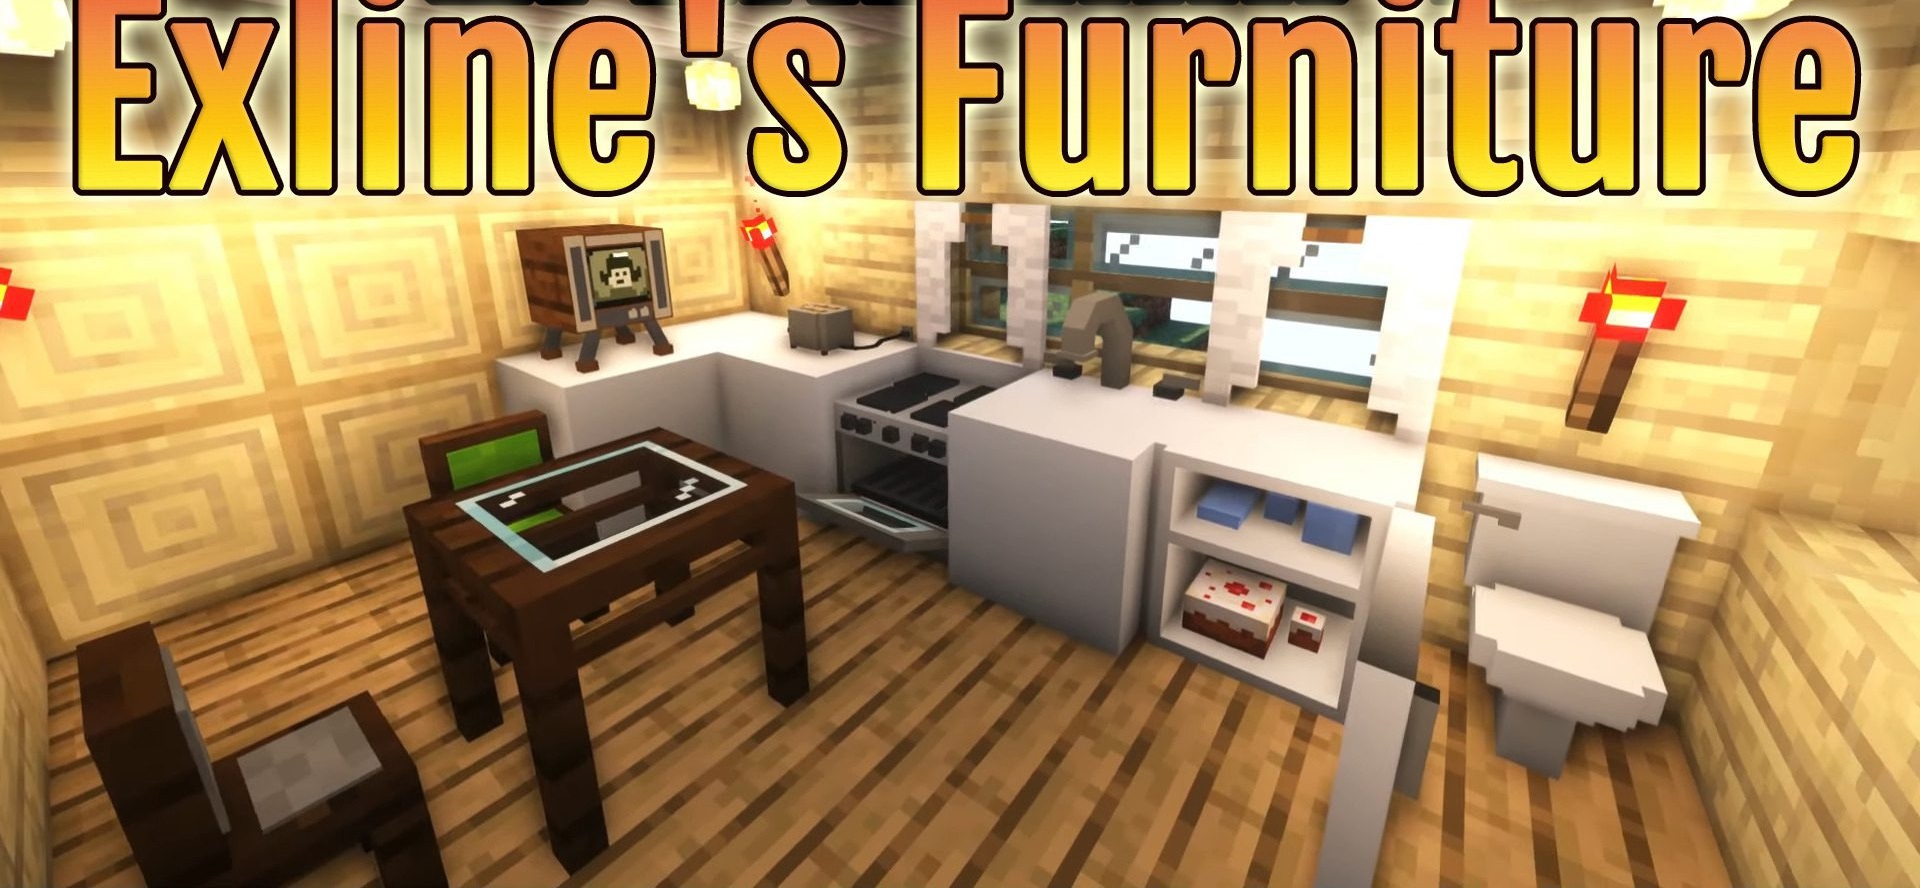 Exline’s Furniture screenshot 1